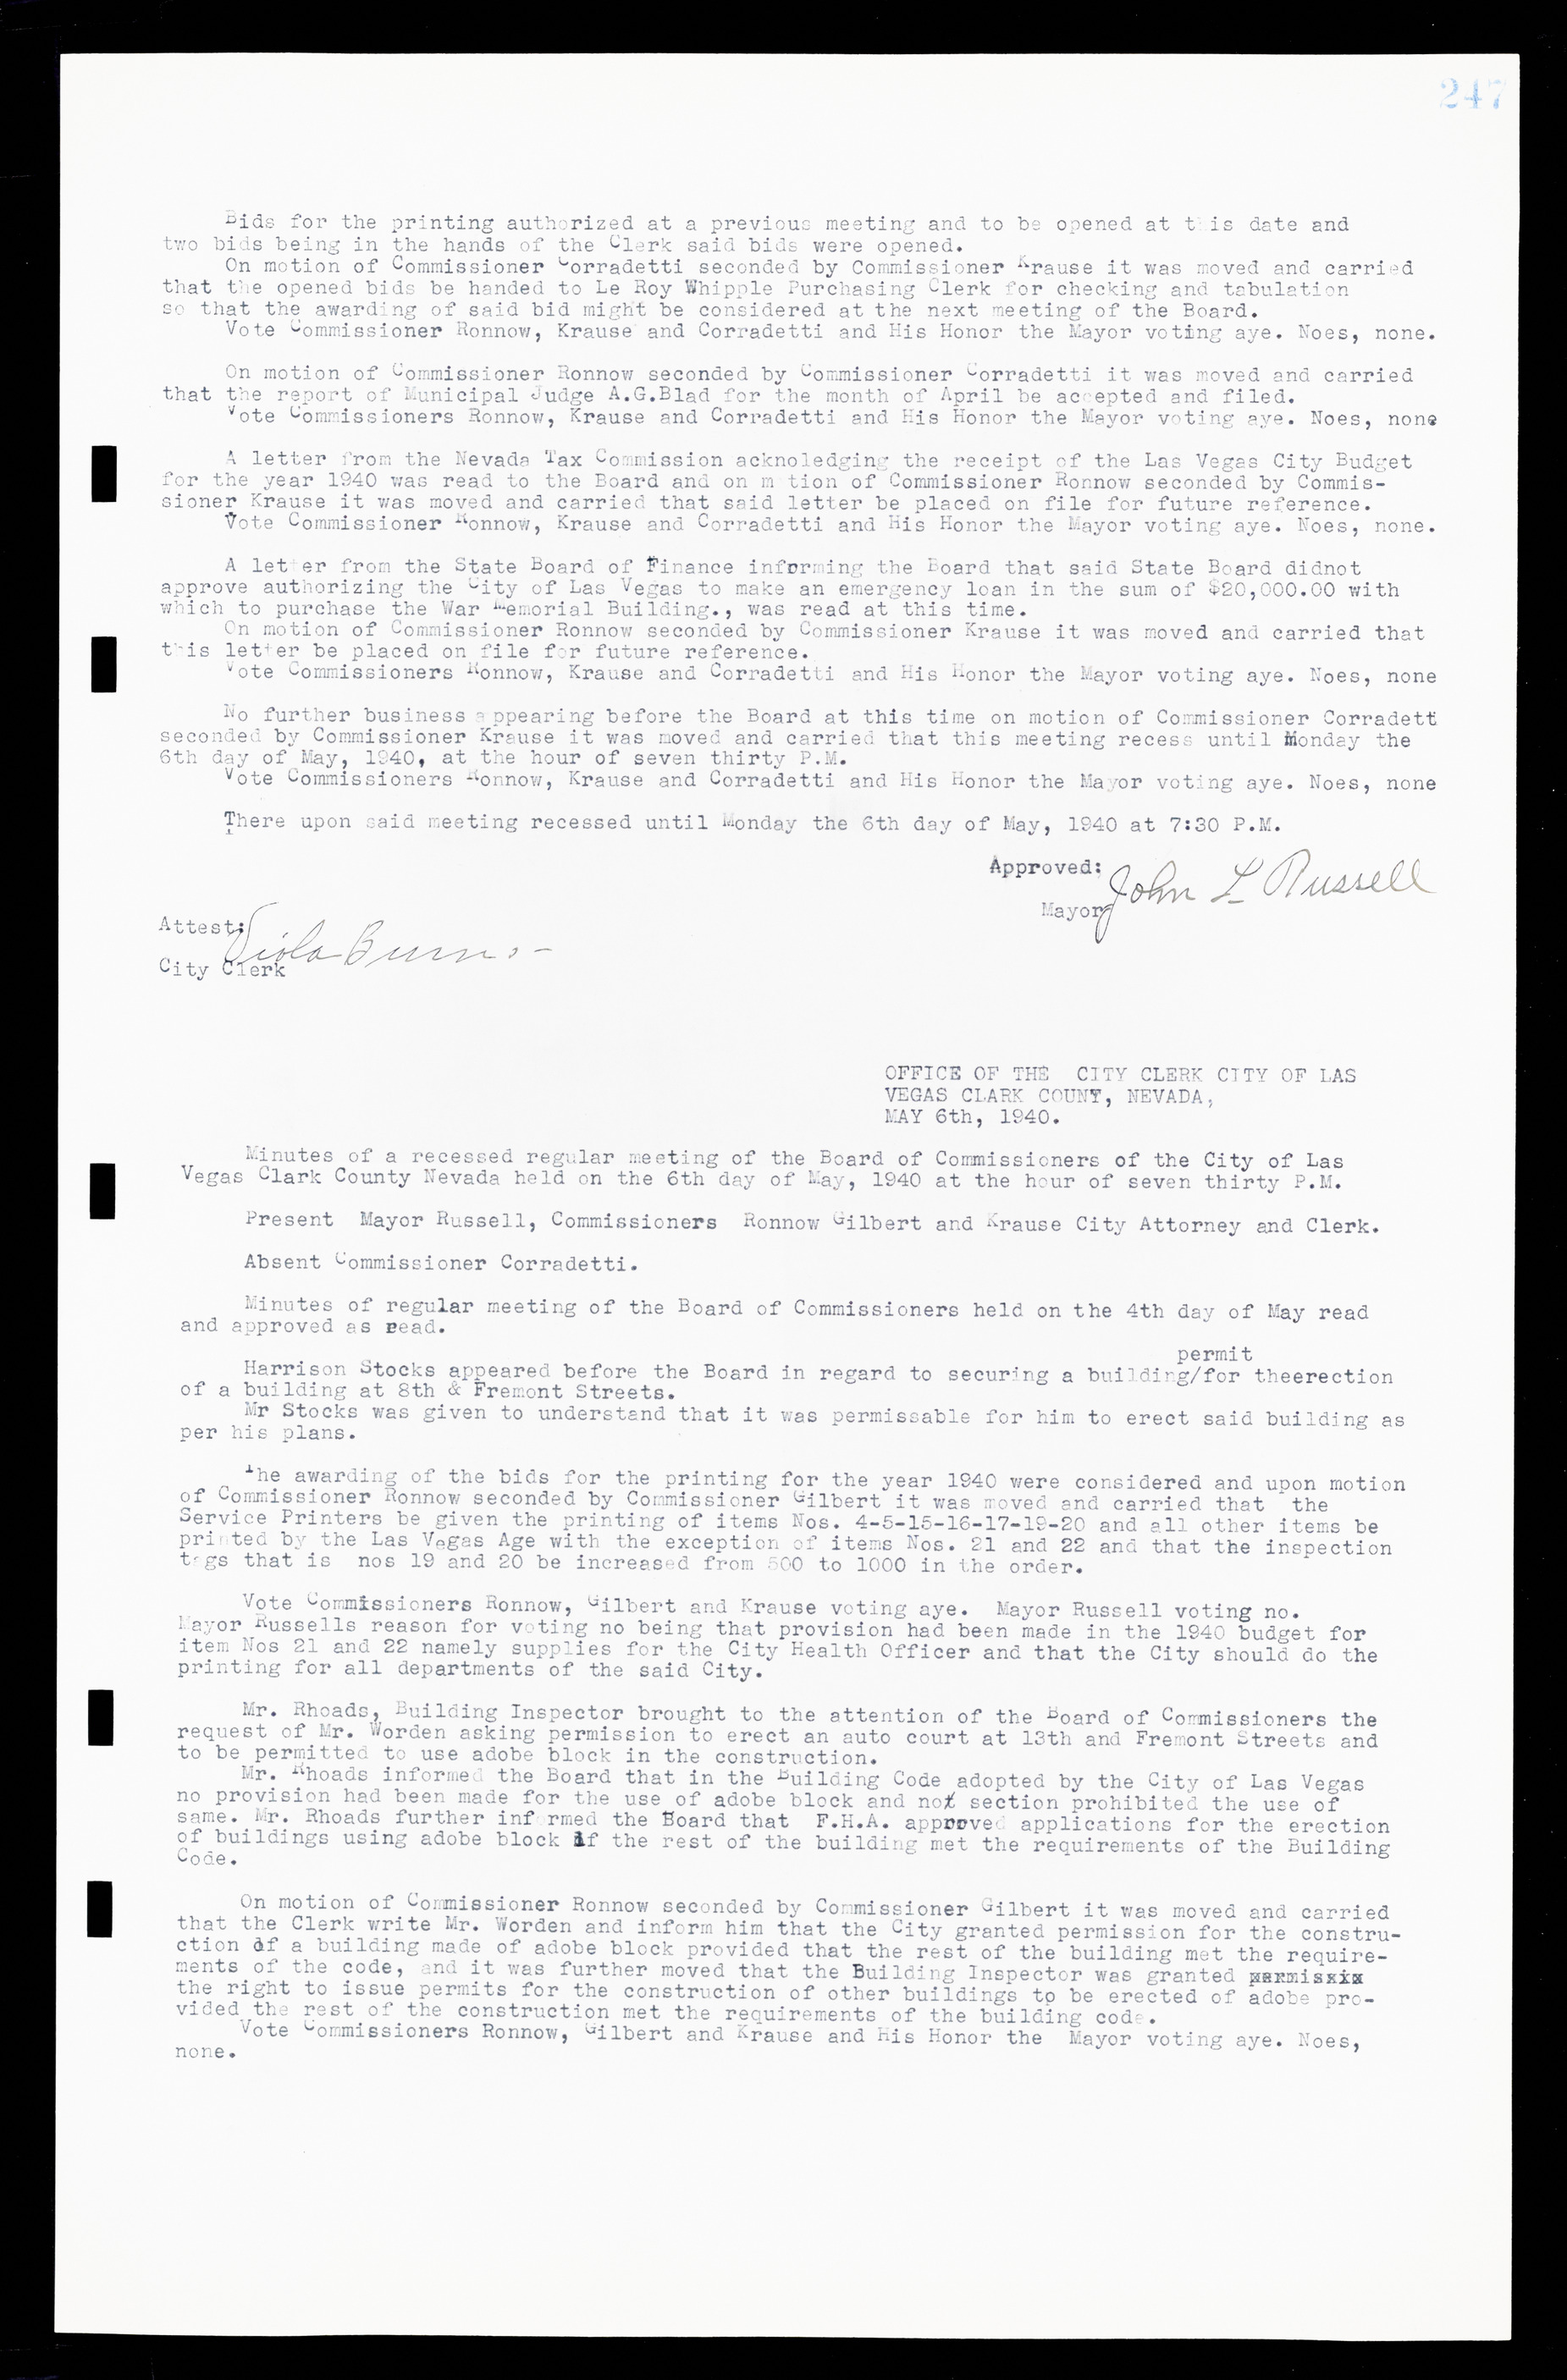 Las Vegas City Commission Minutes, February 17, 1937 to August 4, 1942, lvc000004-267